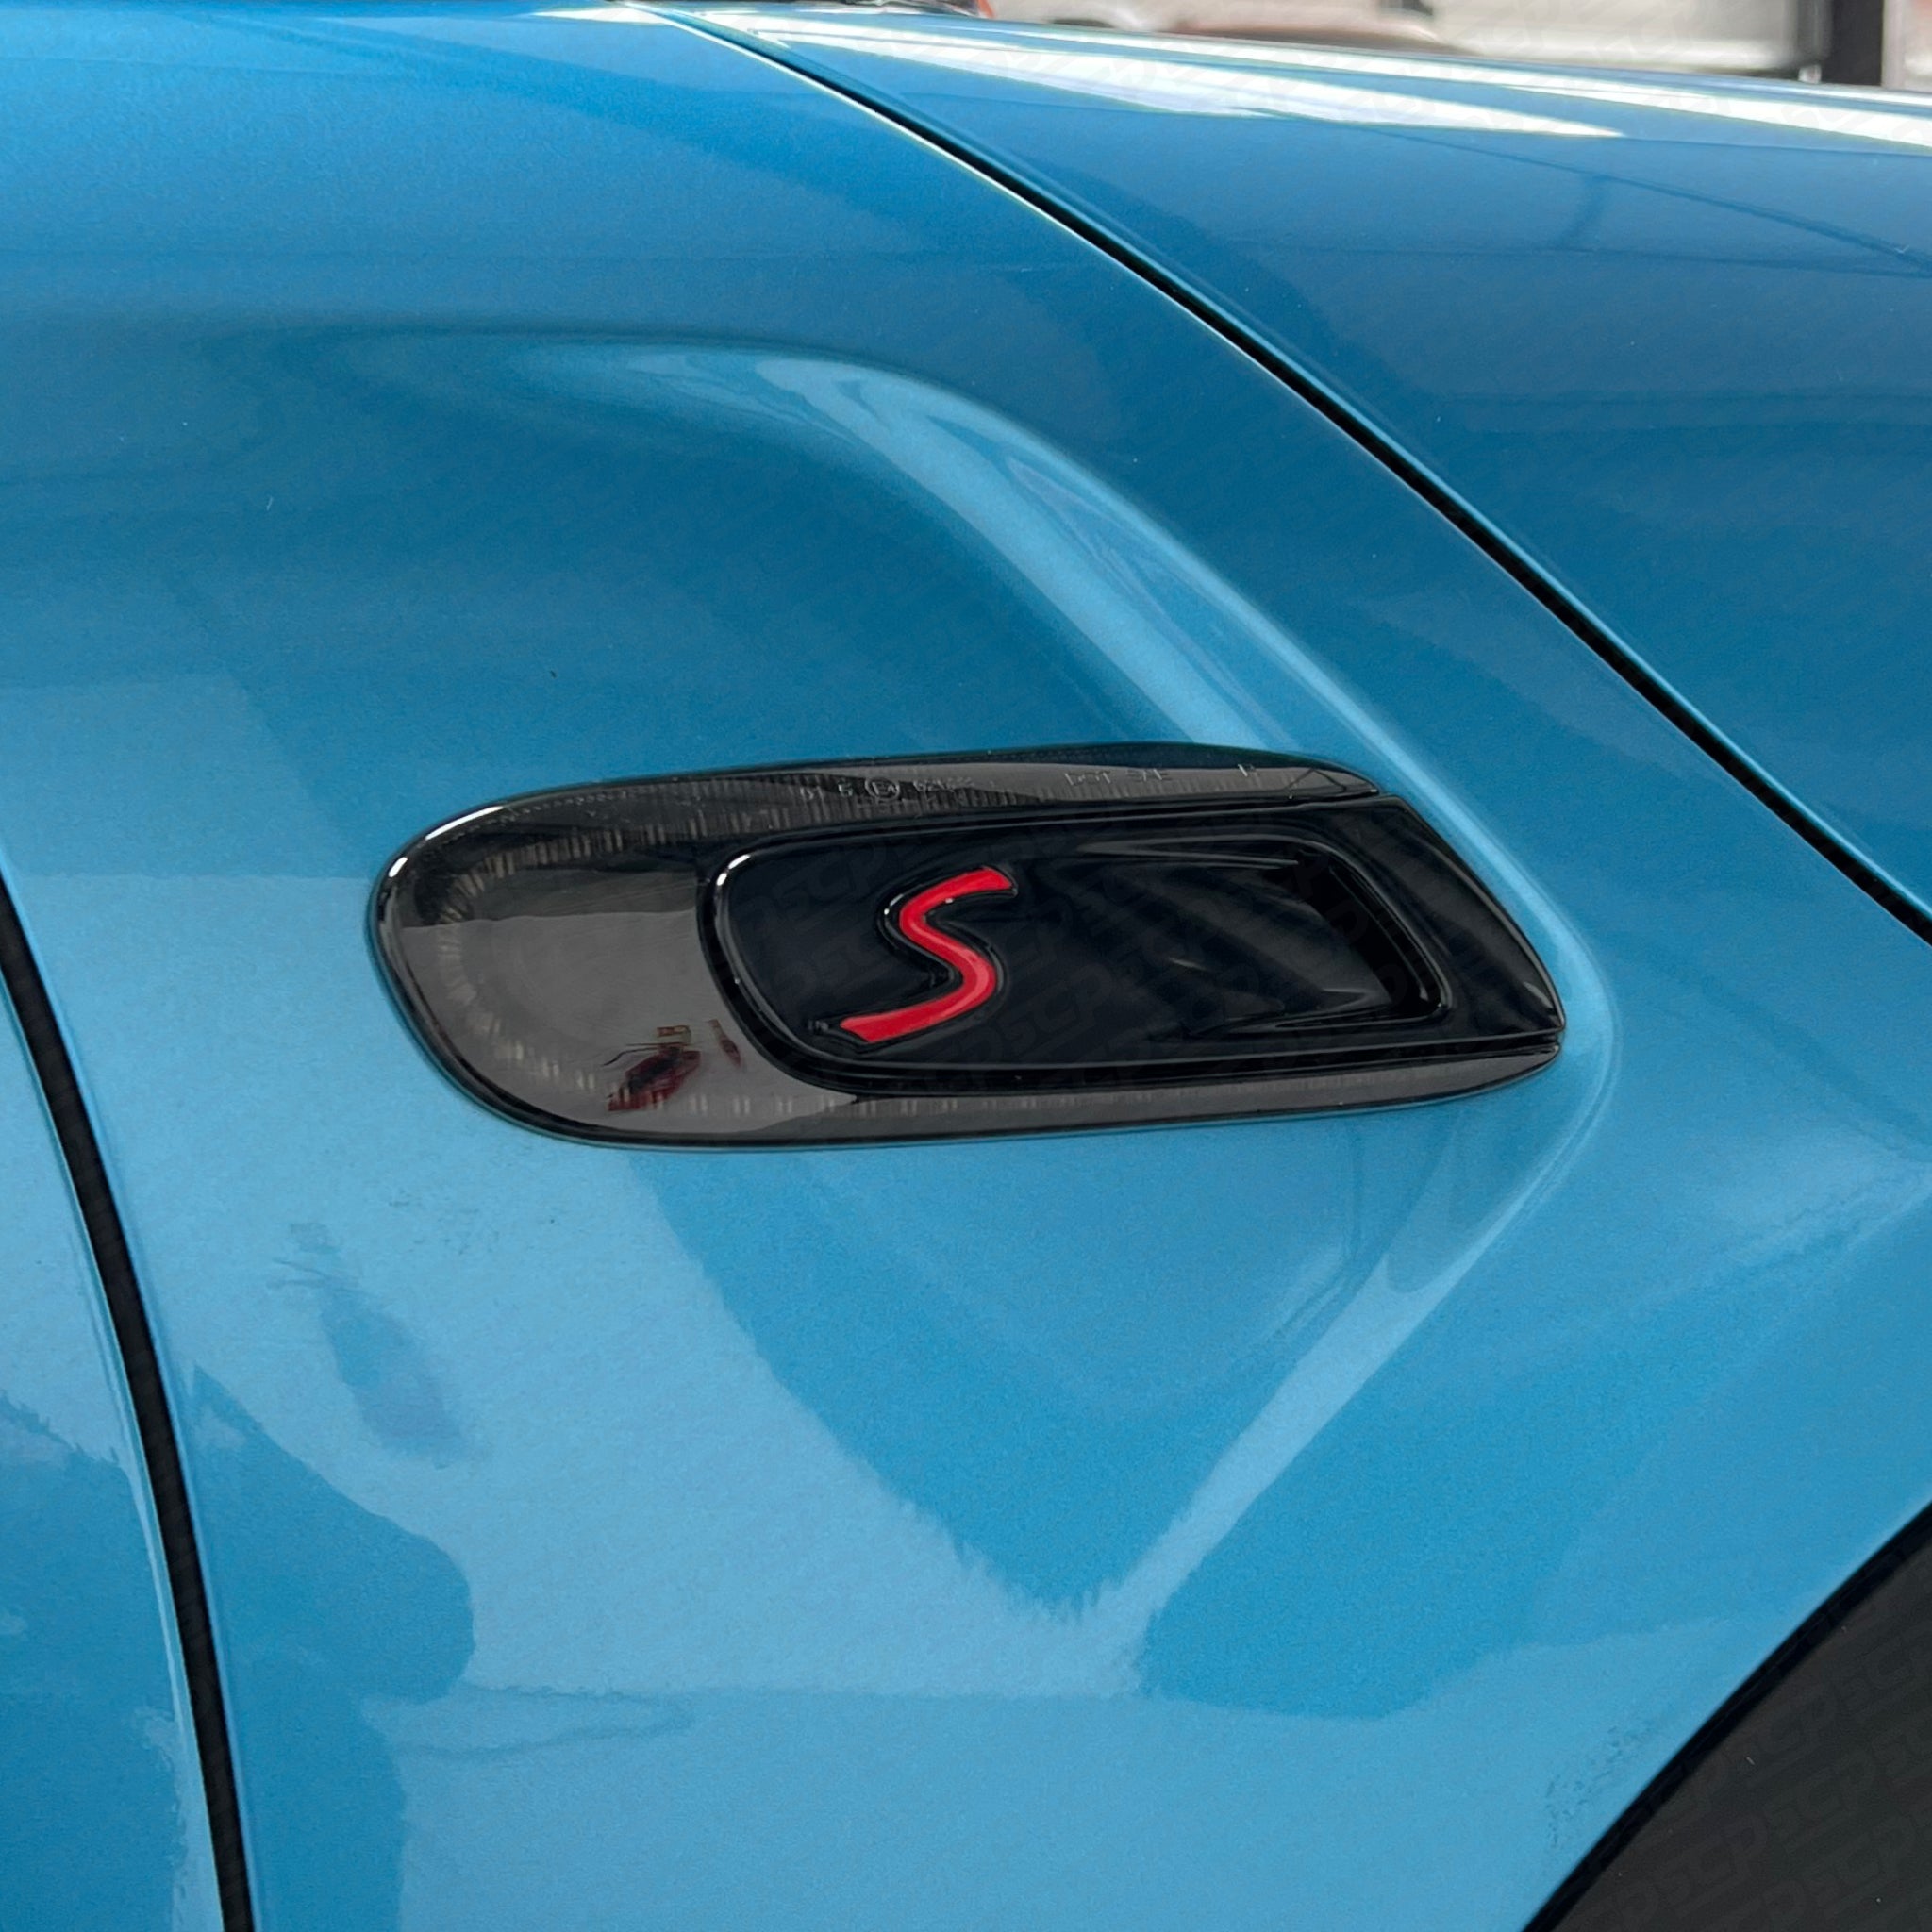 MINI F-Series Cooper S Side Accent Decal / Sticker